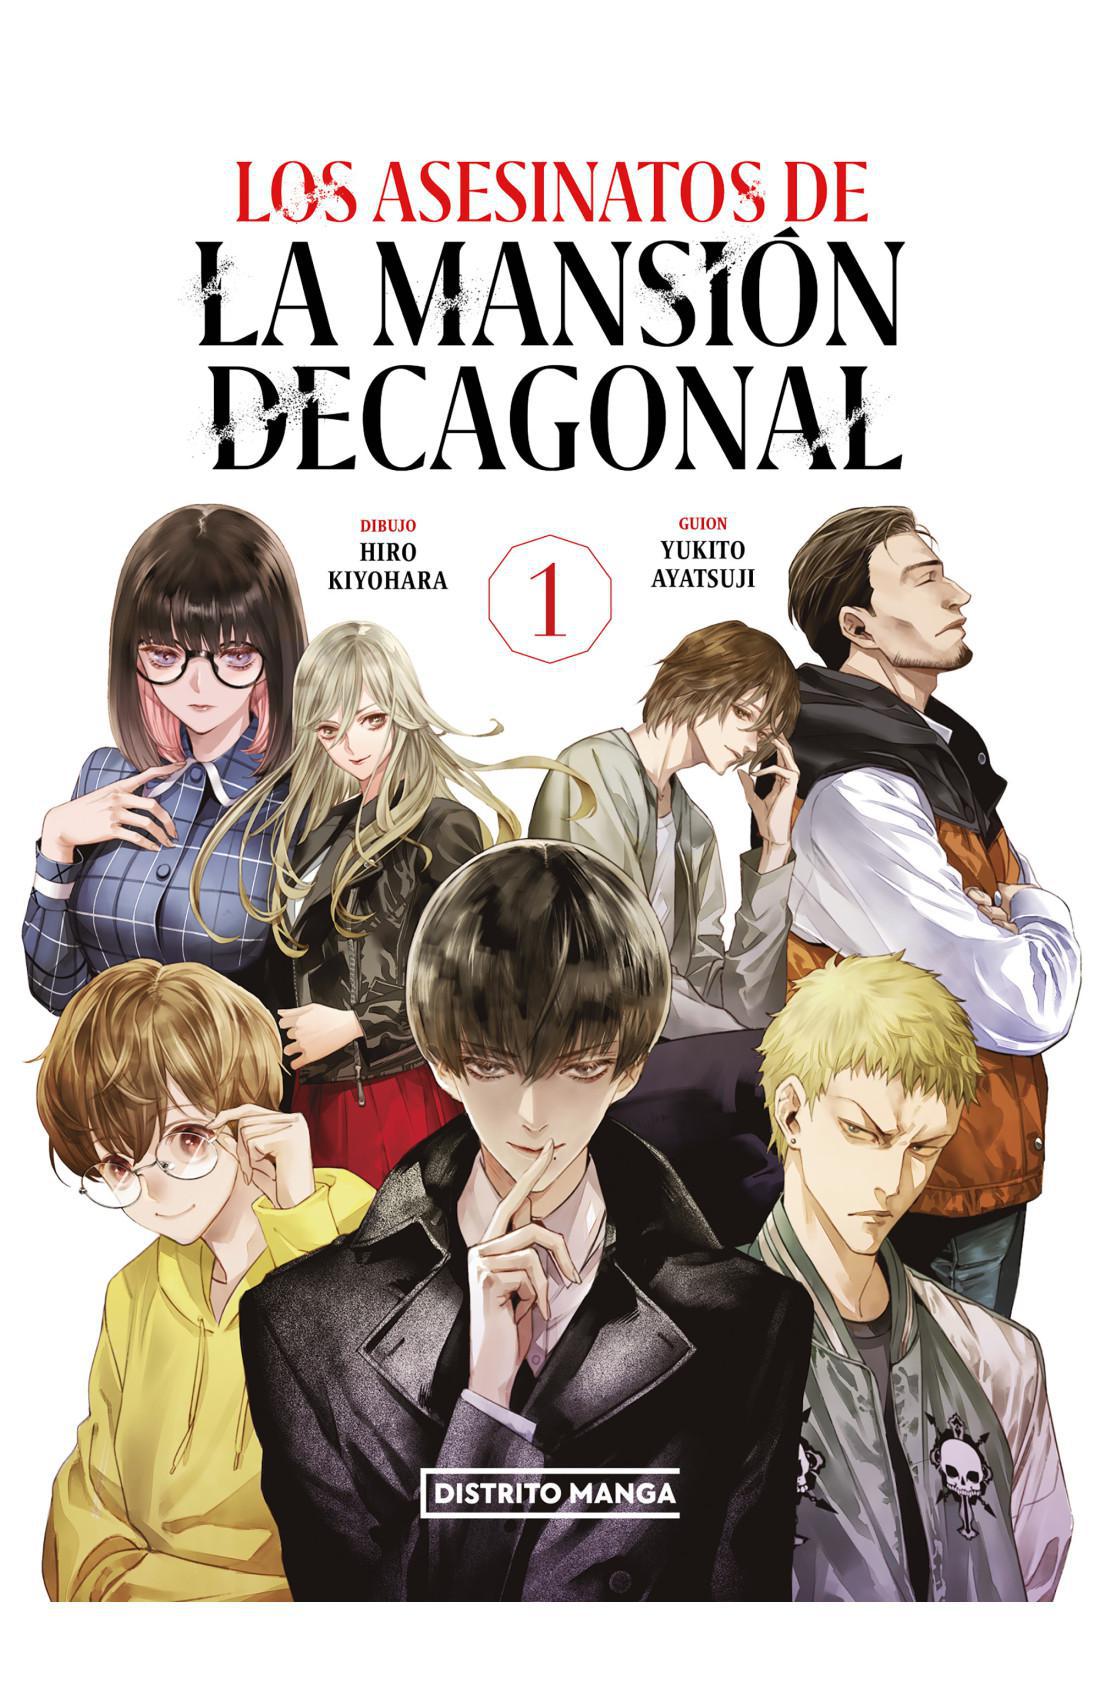 Los Asesinatos de la Mansion Decagonal 1 - Yokito Ayatsuji | Hiro Kiyohara